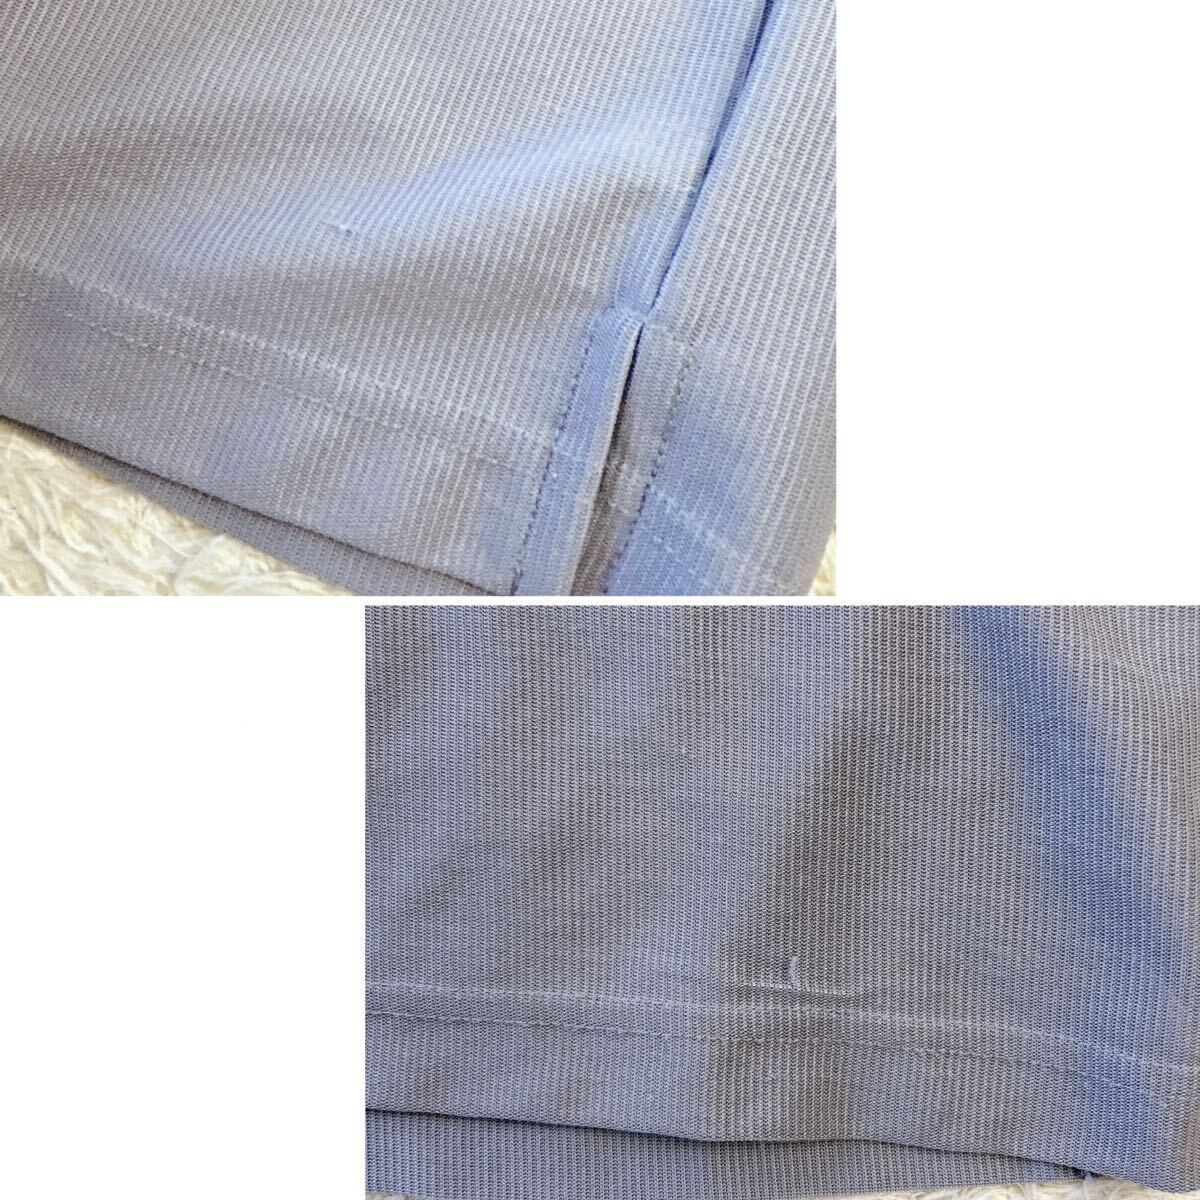 Munsingwear/ Munsingwear wear polo-shirt with short sleeves Golf wear Logo embroidery half Zip gray men's LL